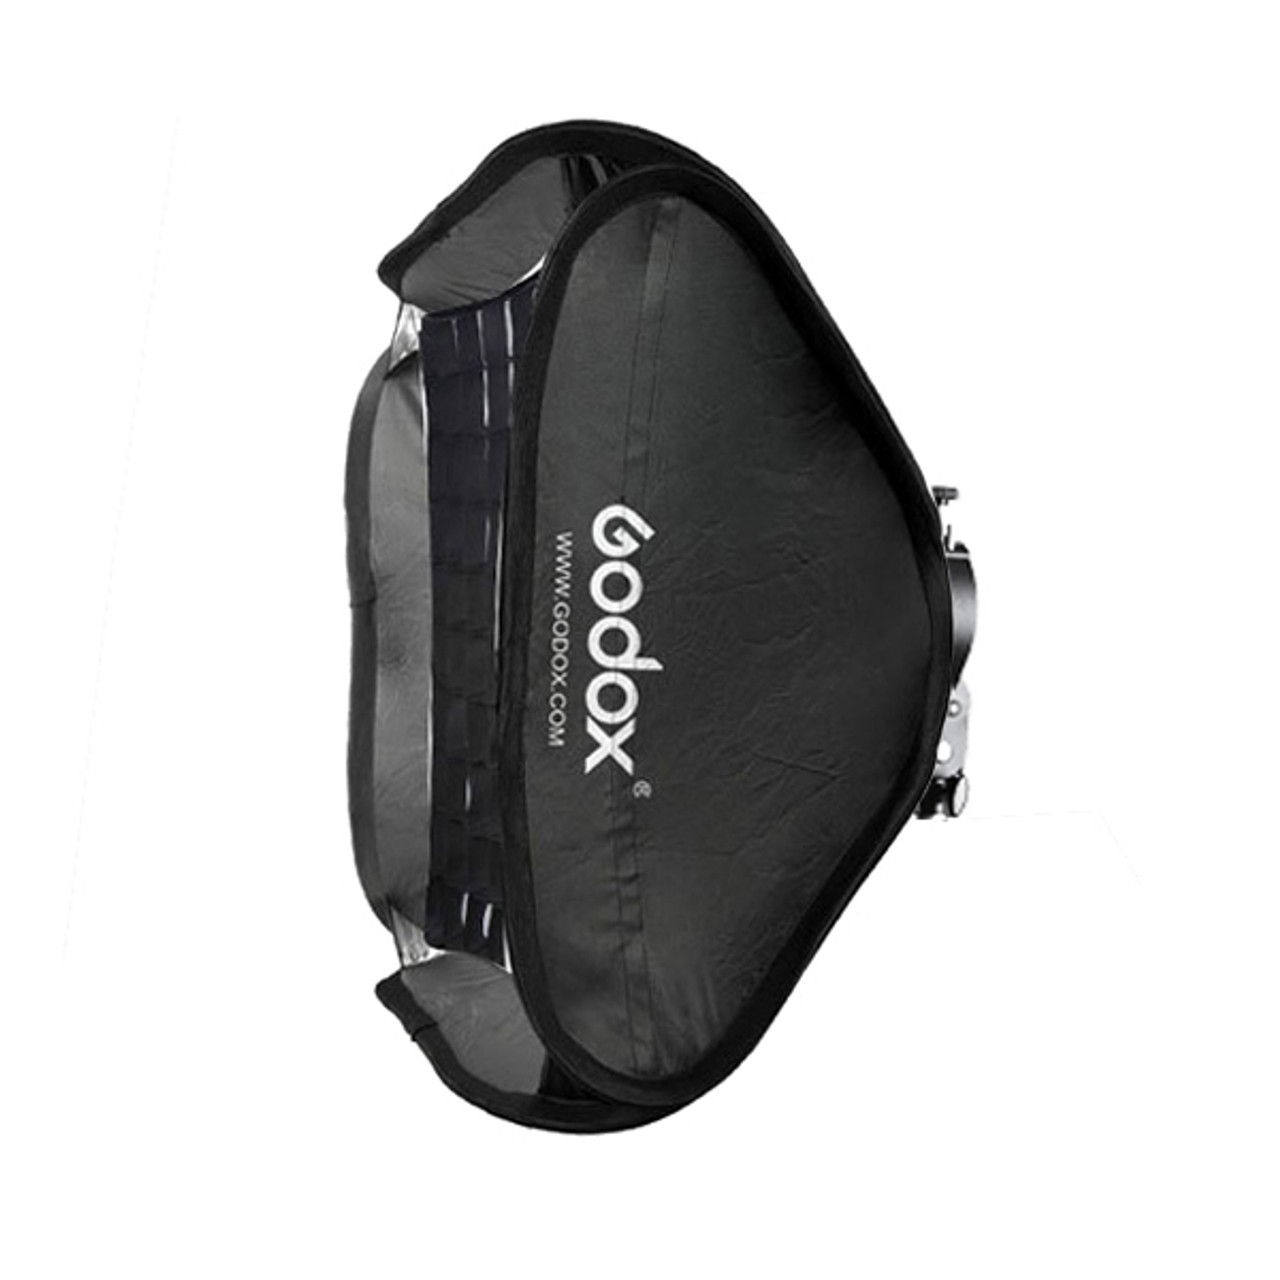 Godox S2 Speedlite Bracket with Softbox, Grid & Carrying